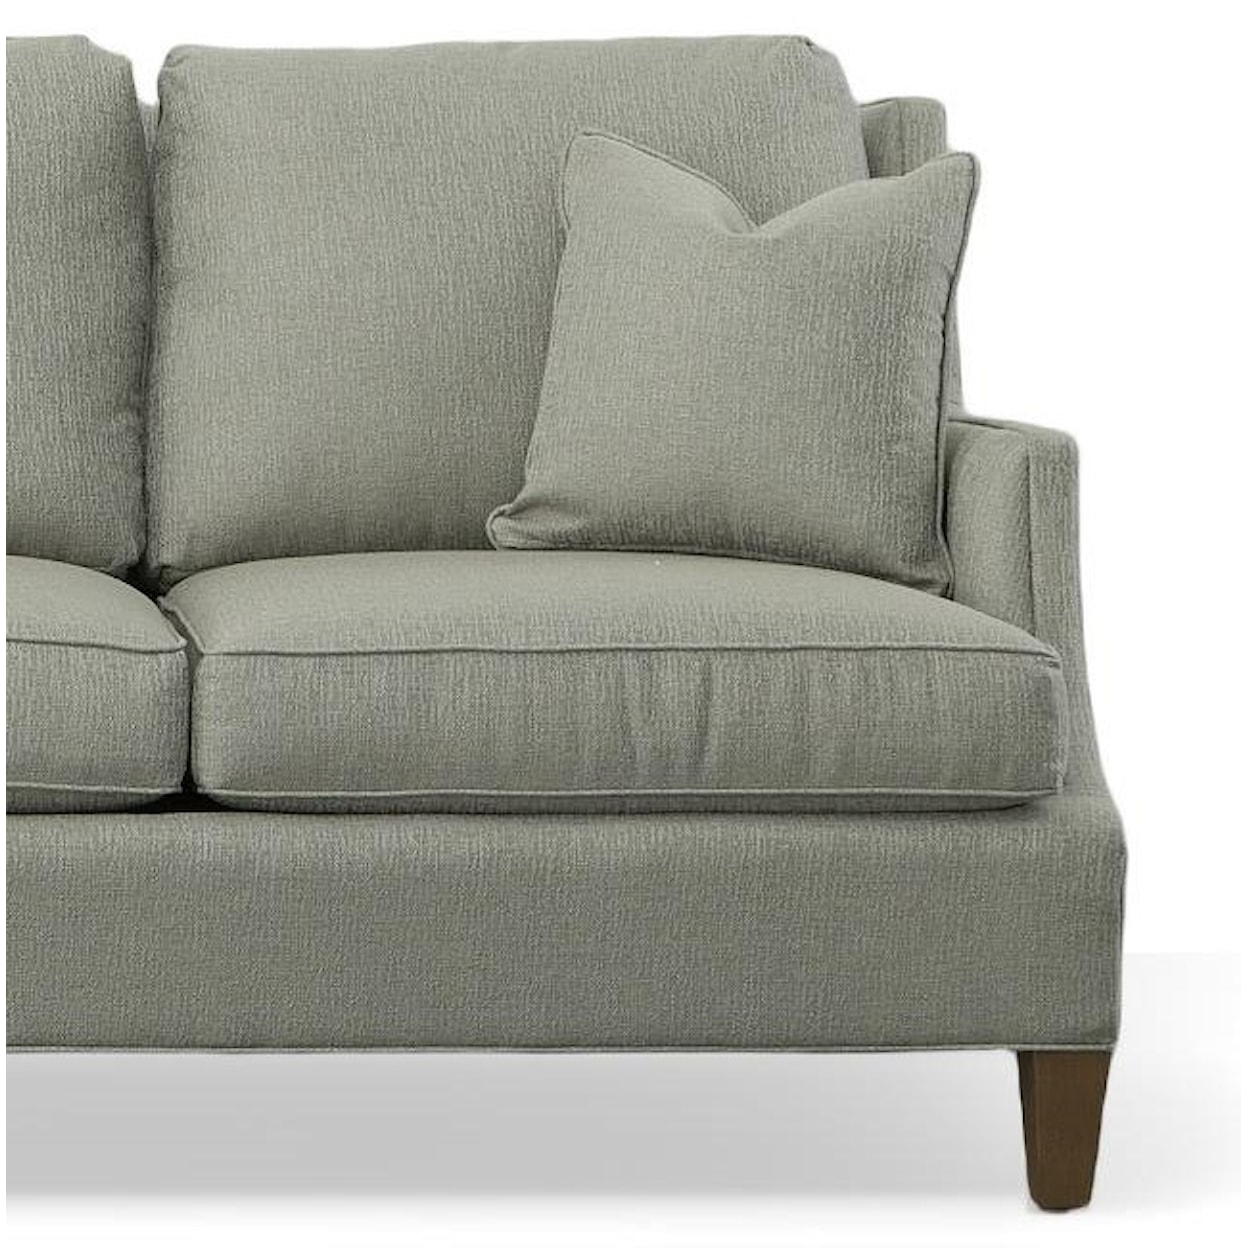 Fairfield Savannah Upholstered 3 Seat Sofa